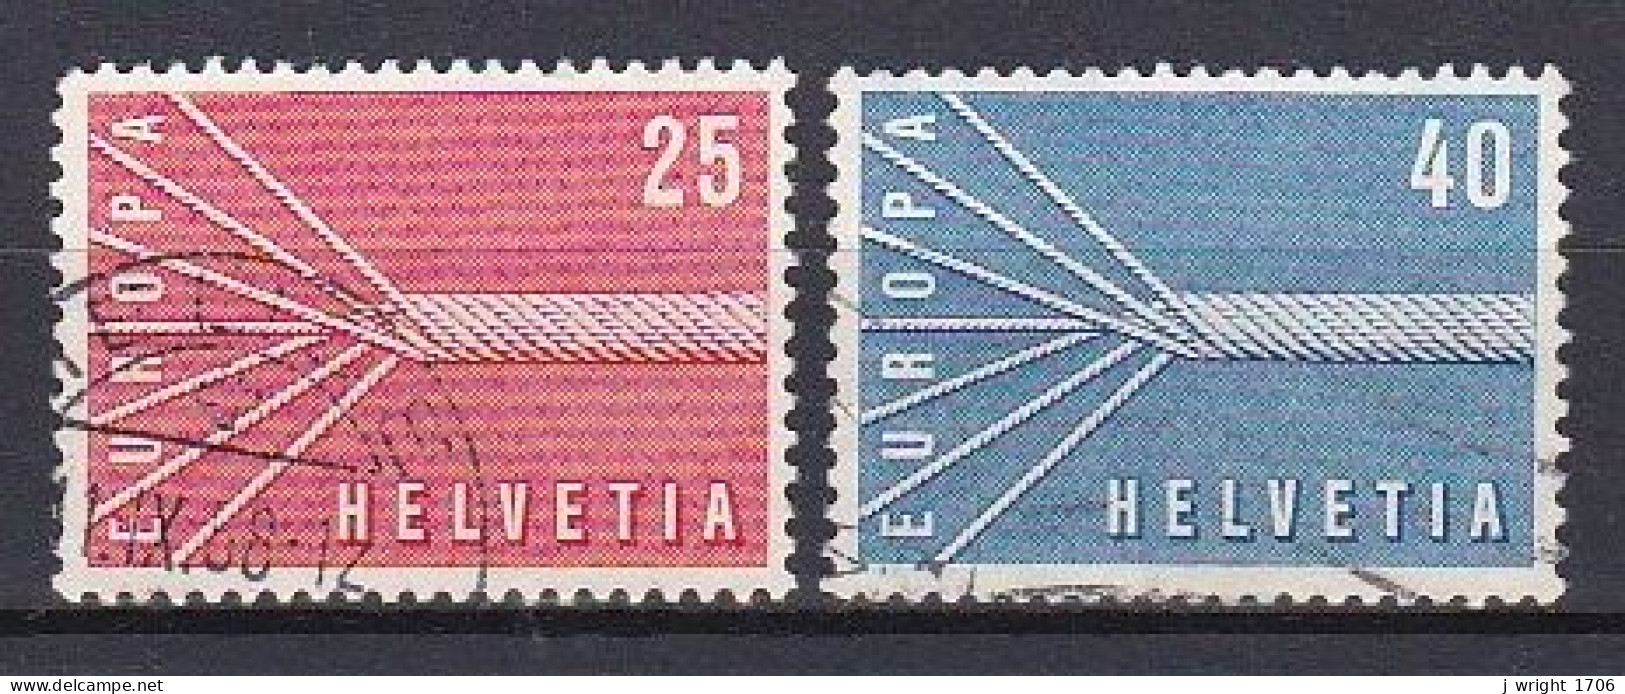 Switzerland, 1957, Europa CEPT, Set, USED - Oblitérés